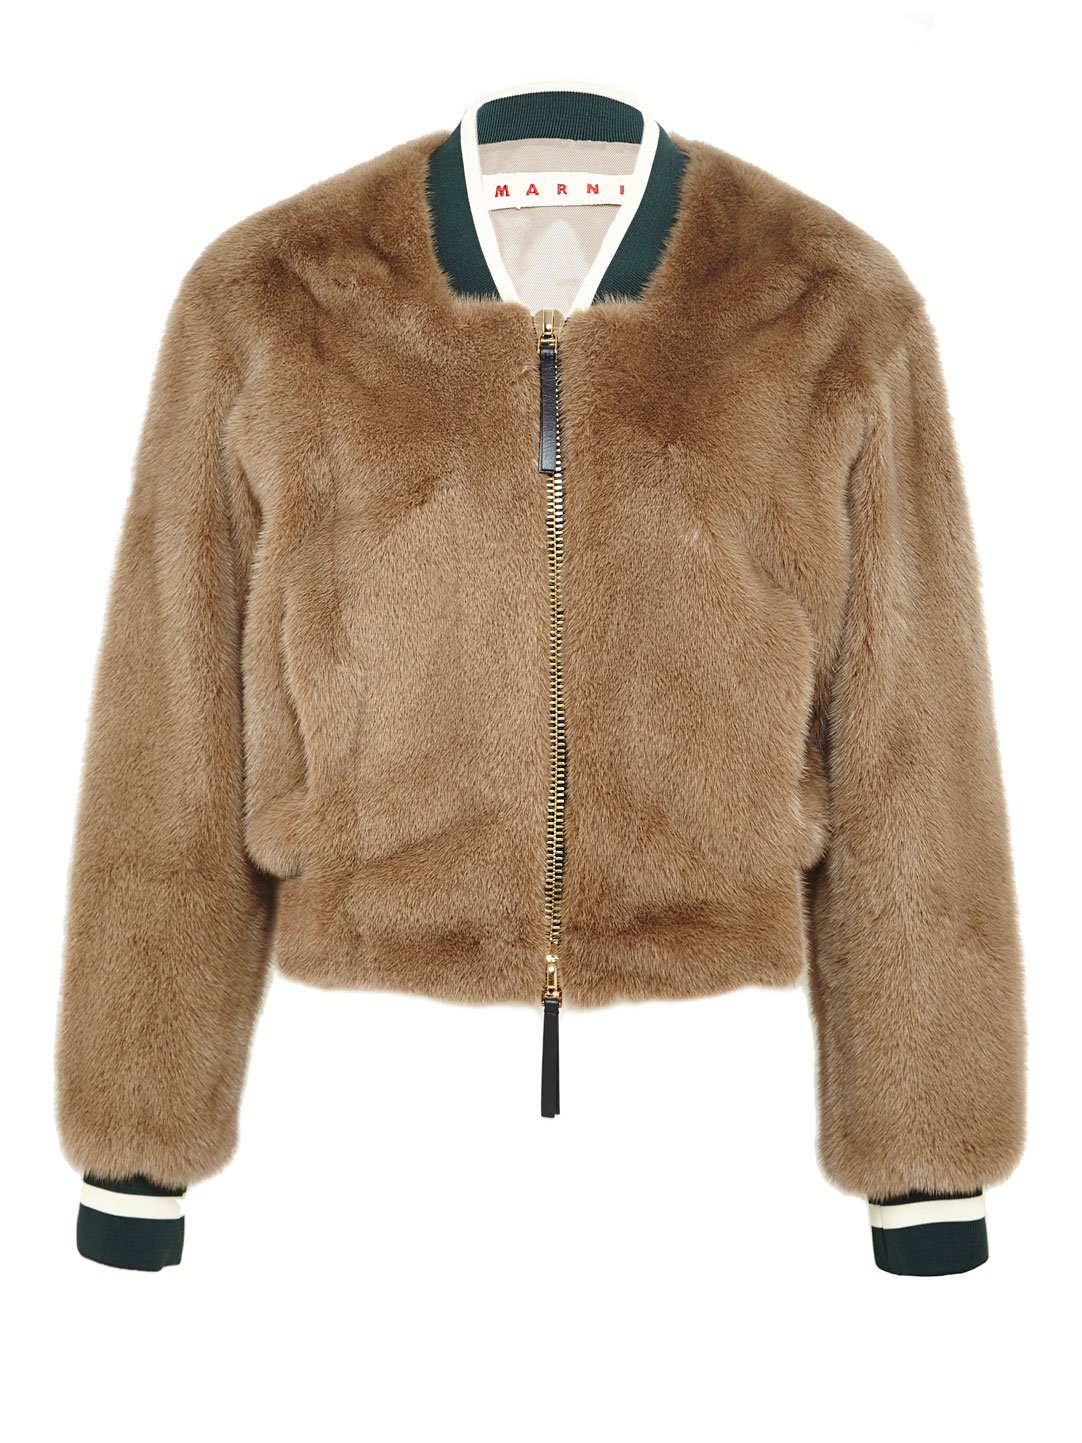 Lyst - Marni Womens Mink Fur Bomber Jacket in Brown